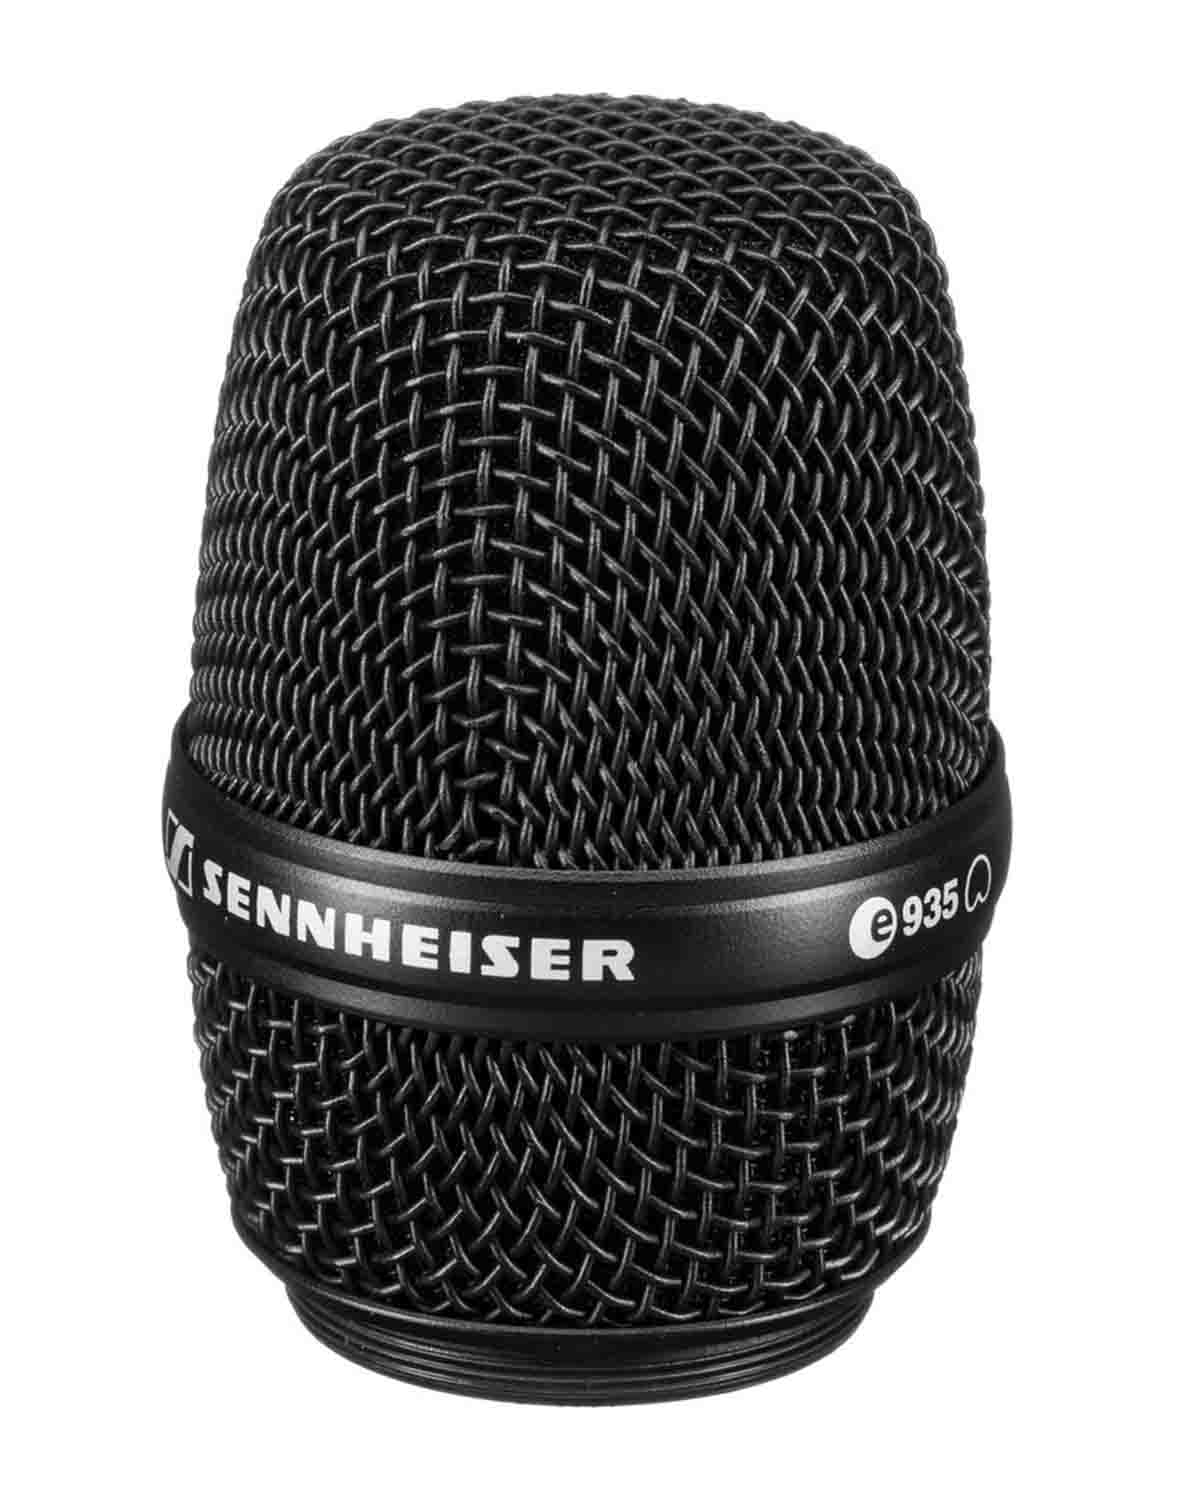 Sennheiser MMD 935-1 BK, Cardioid Dynamic Capsule for Handheld Transmitters - Black - Hollywood DJ